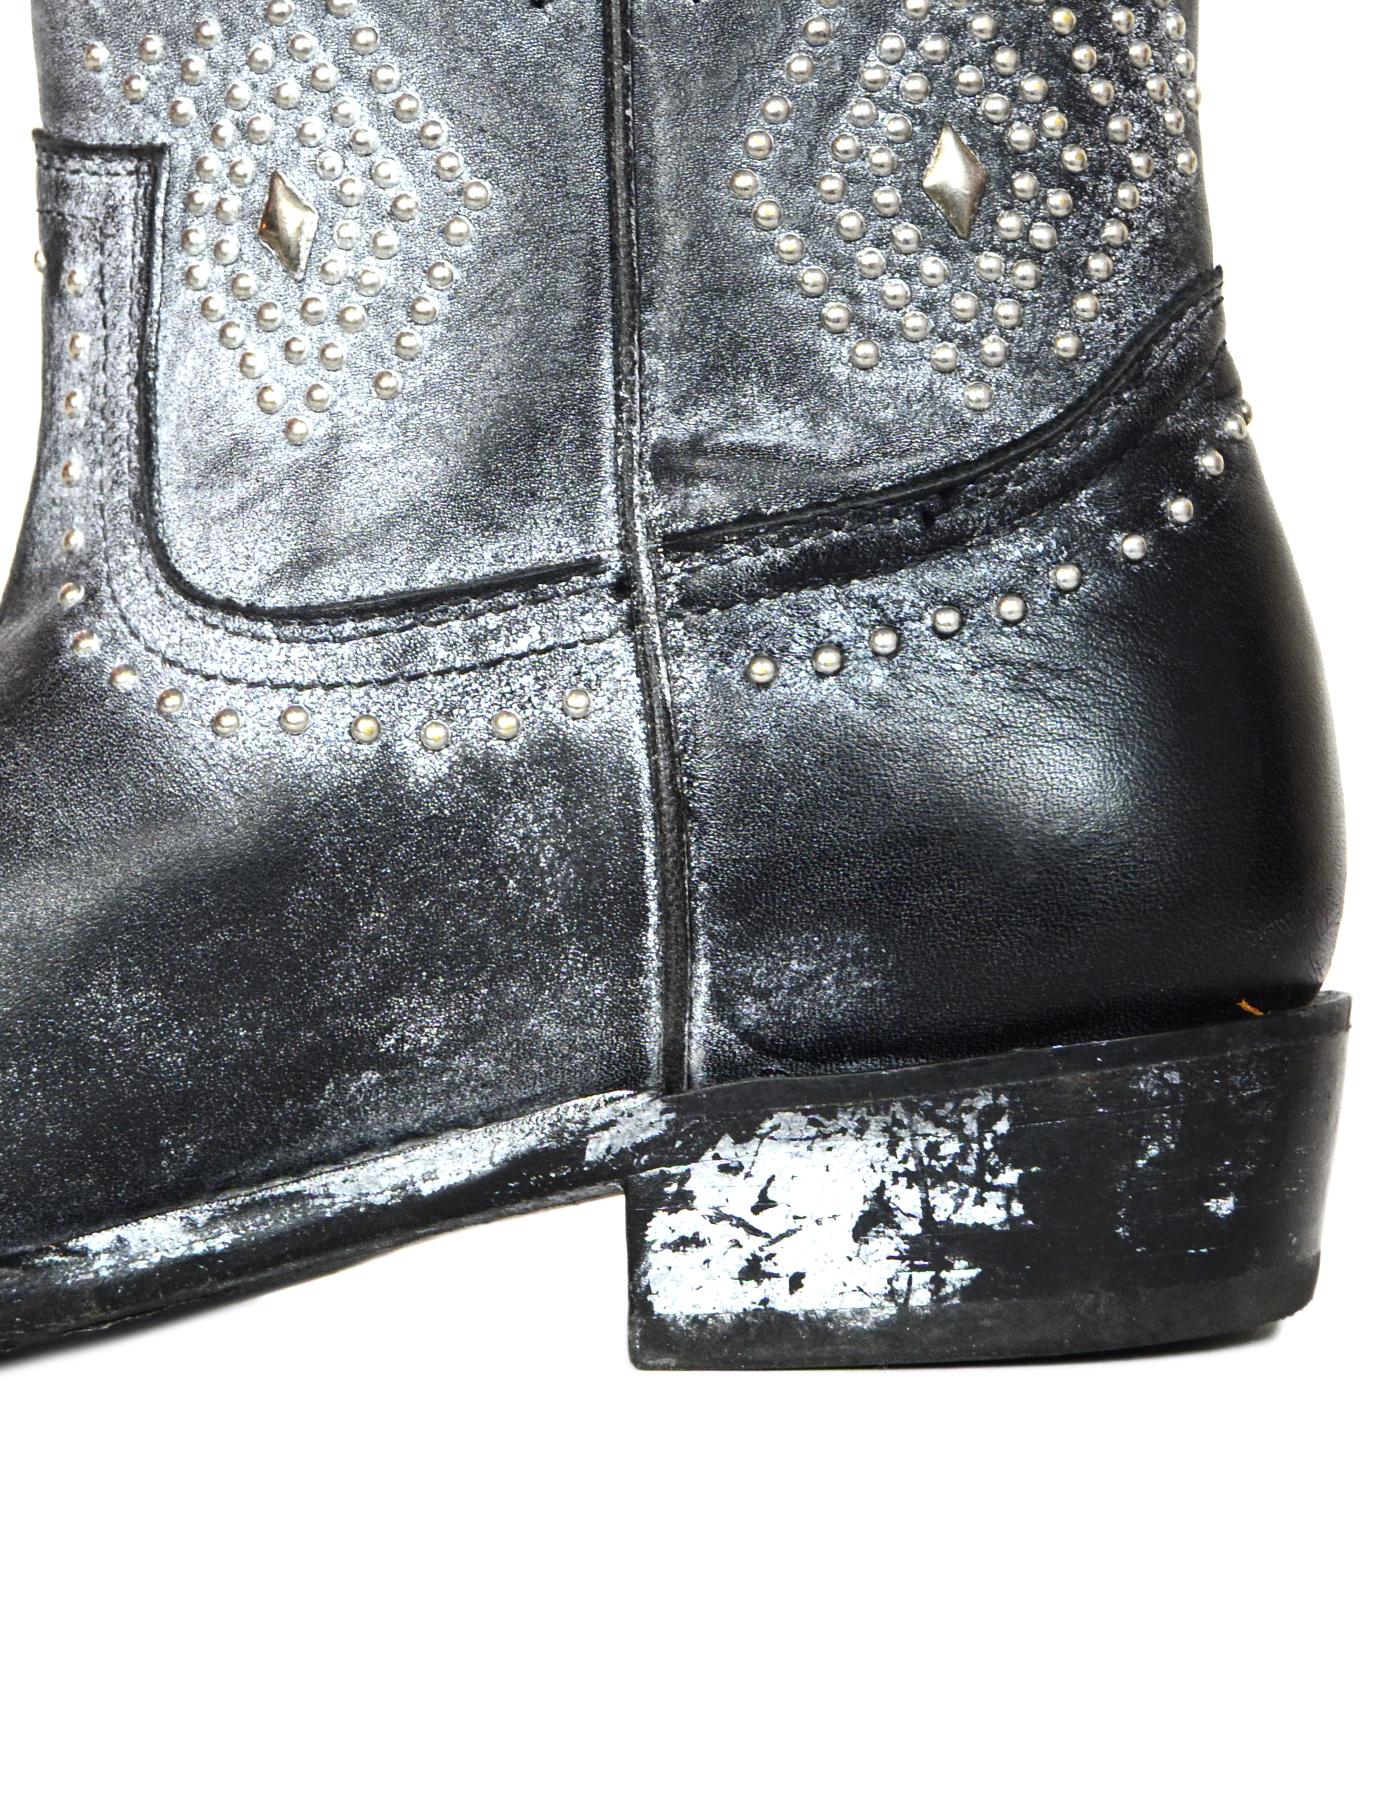 Frye Black Leather Billy Studded Short Boots Sz 5.5 3